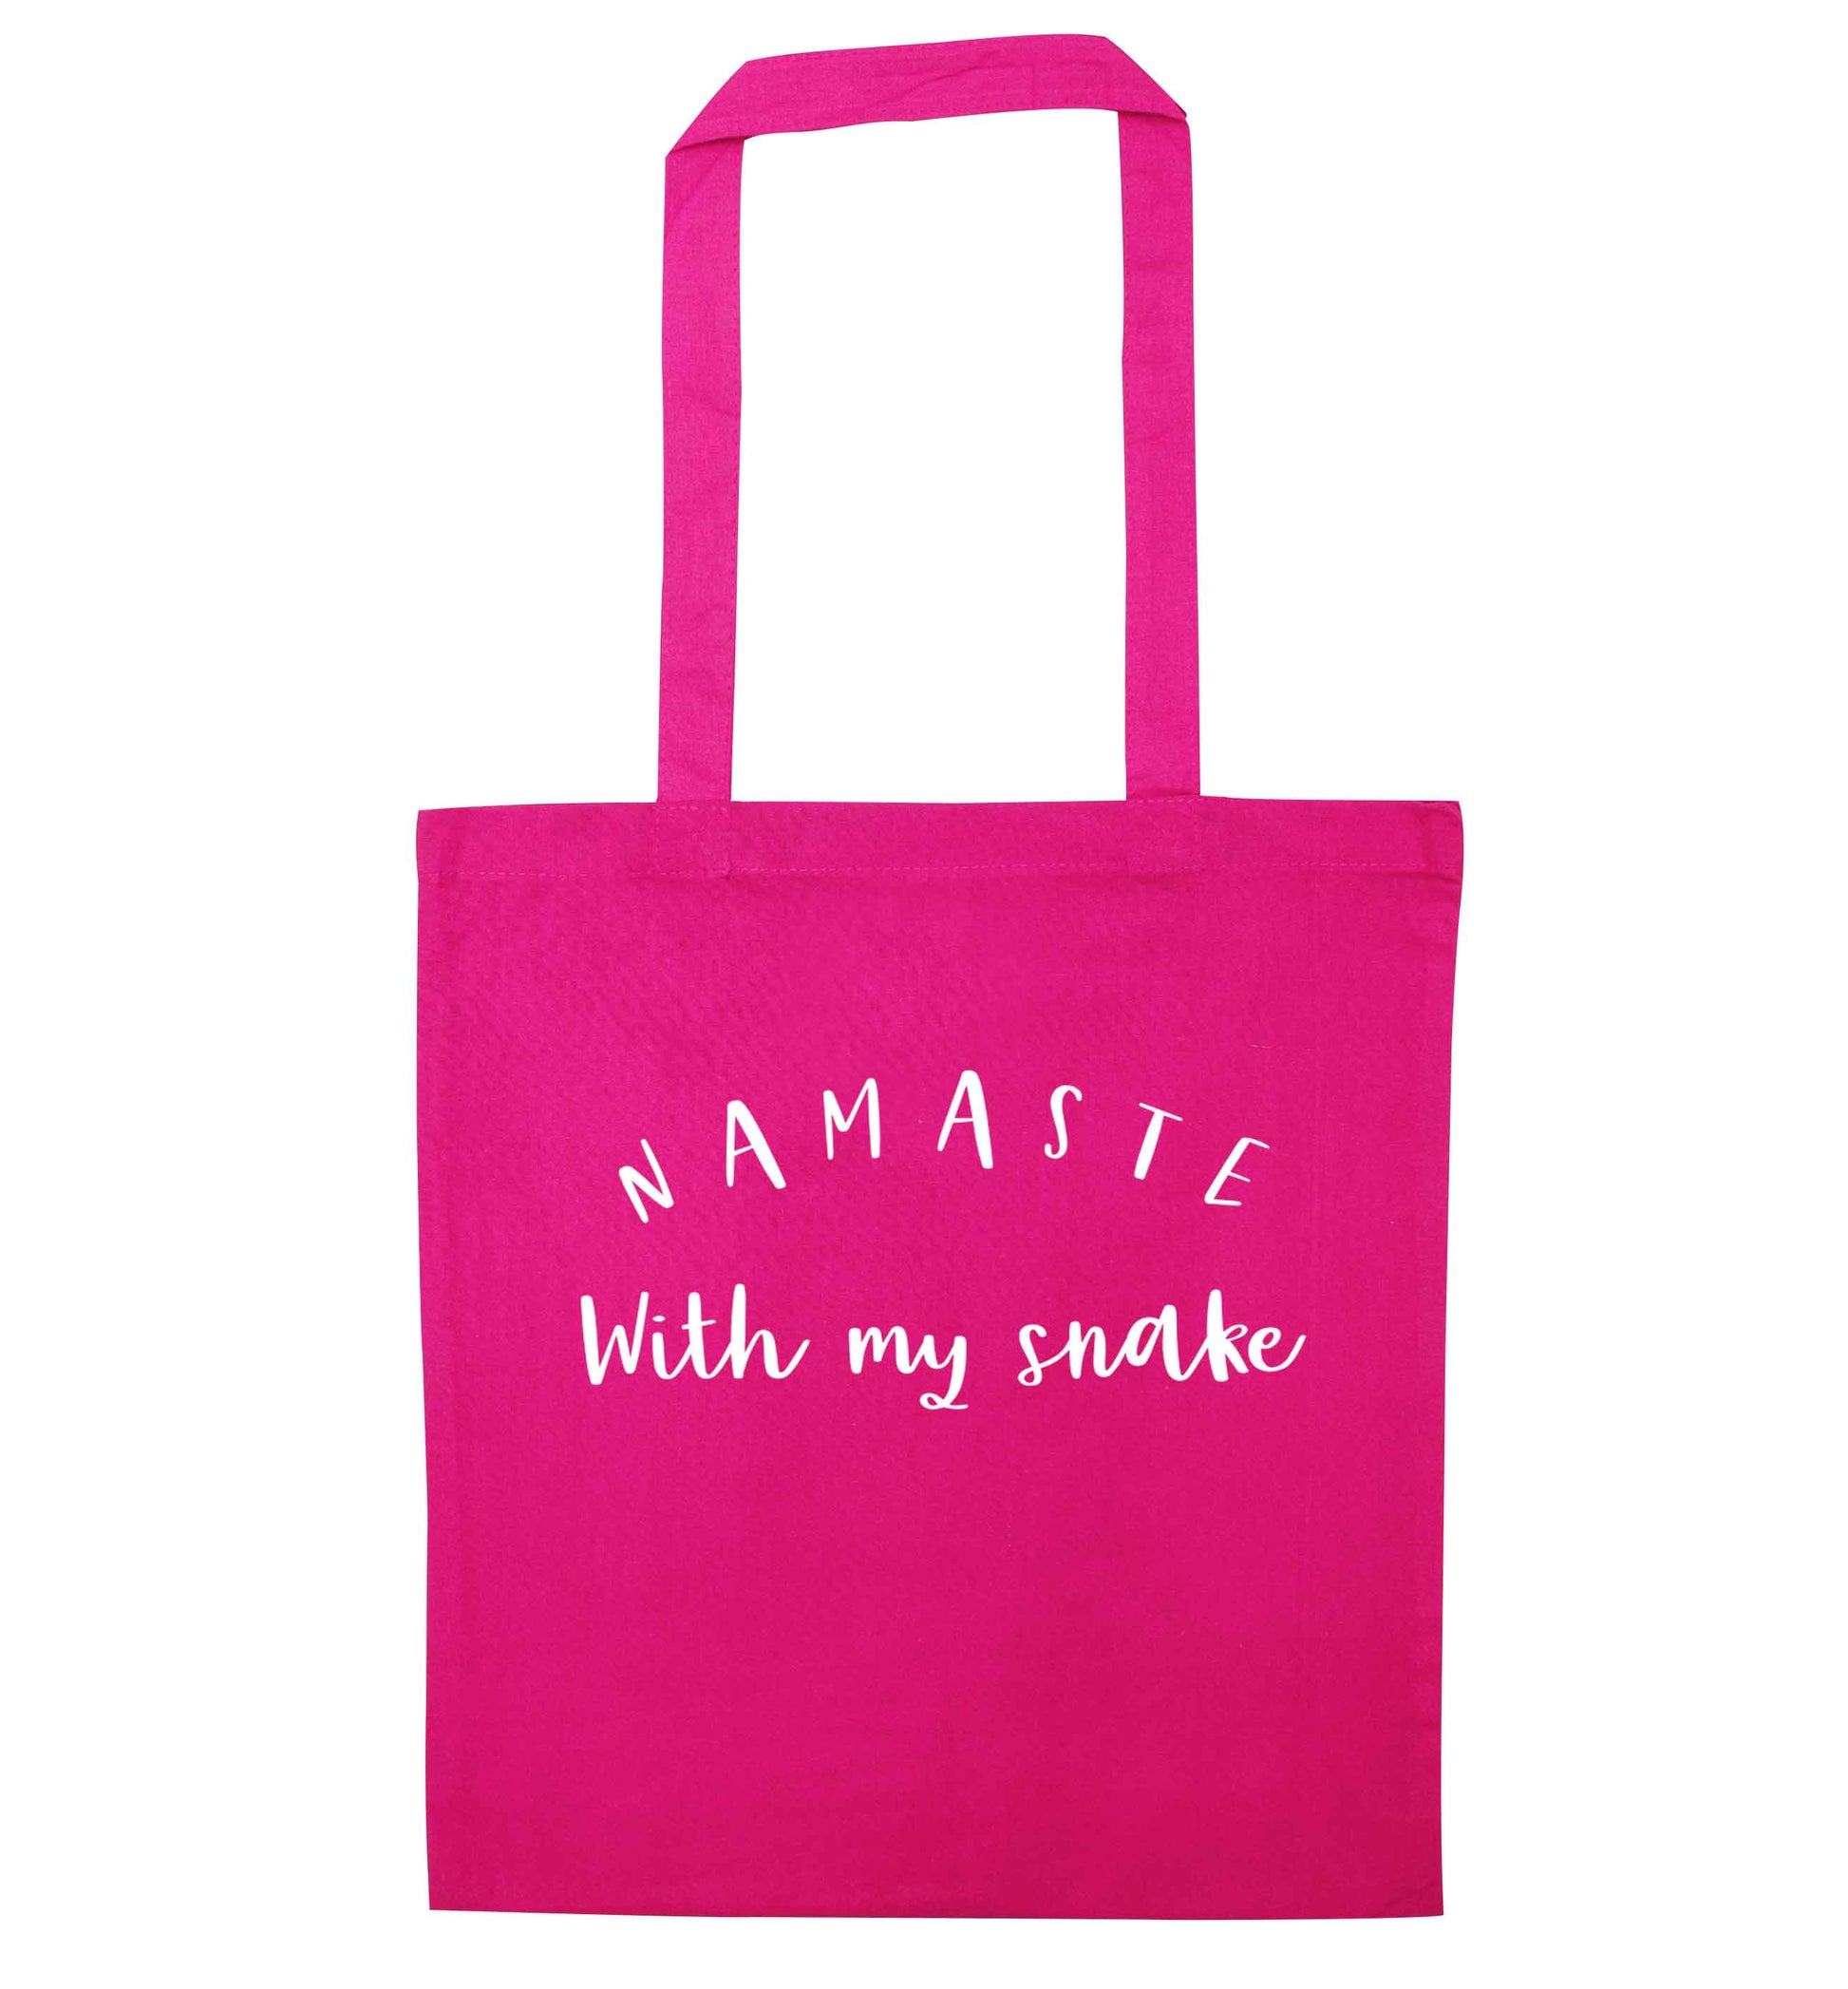 Namaste with my snake pink tote bag